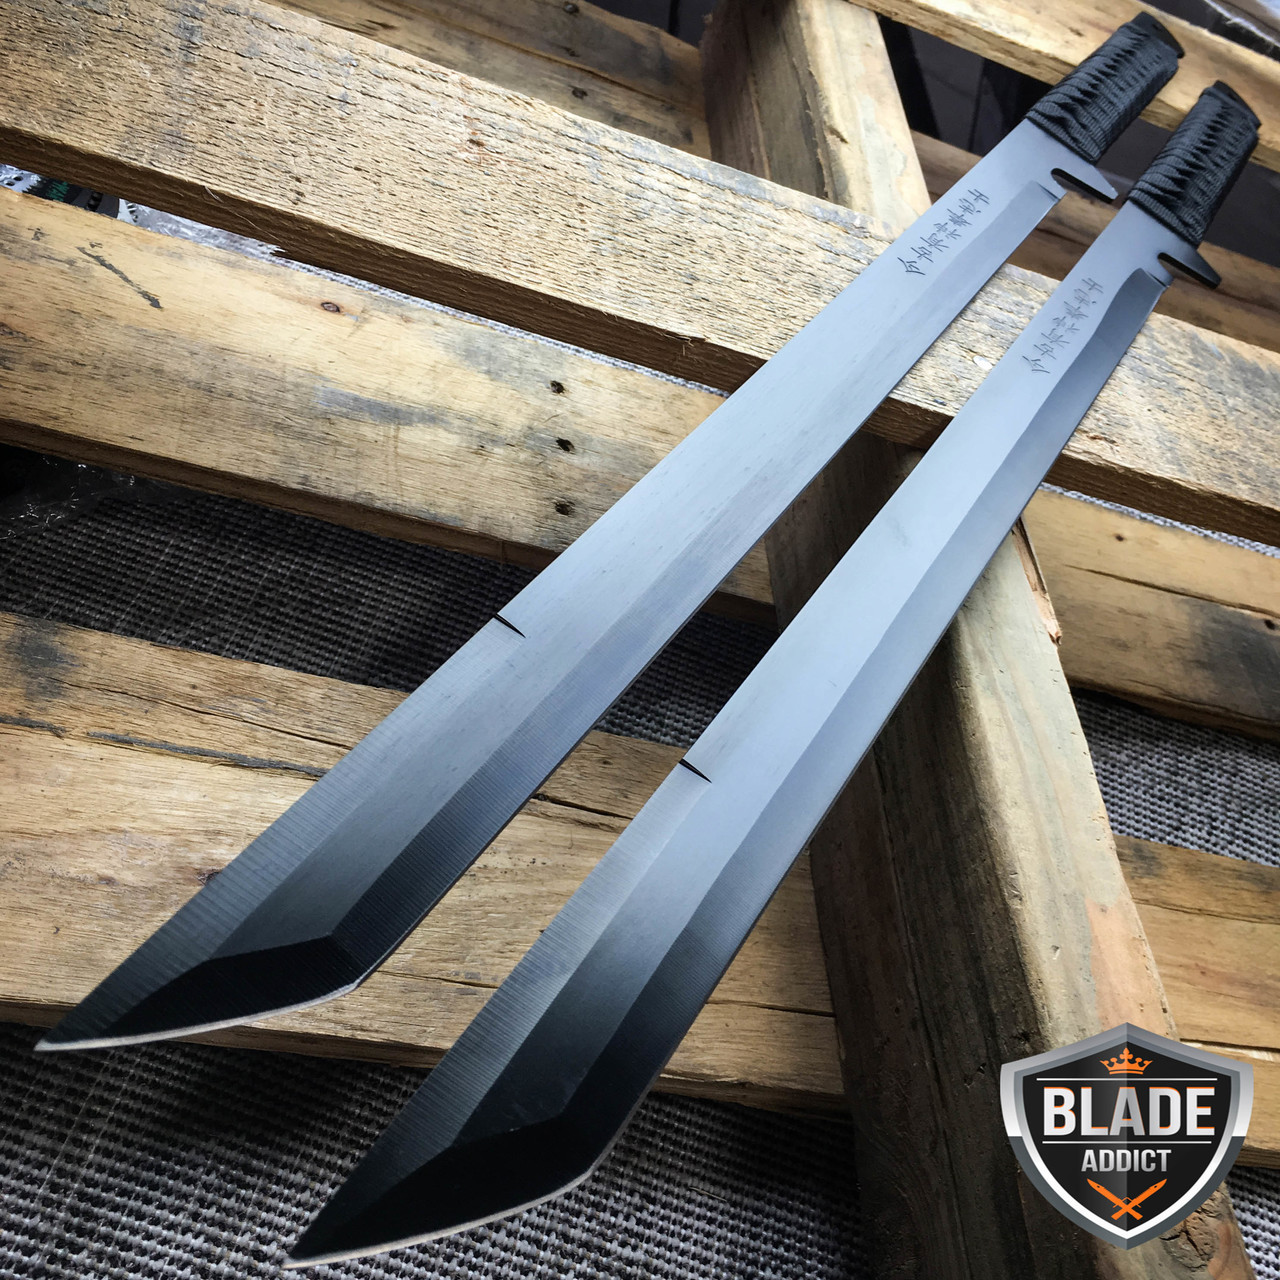 27 Black Ninja Tactical Full Tang Fixed Blade Machete Survival Zombie Sword New Megaknife 0617